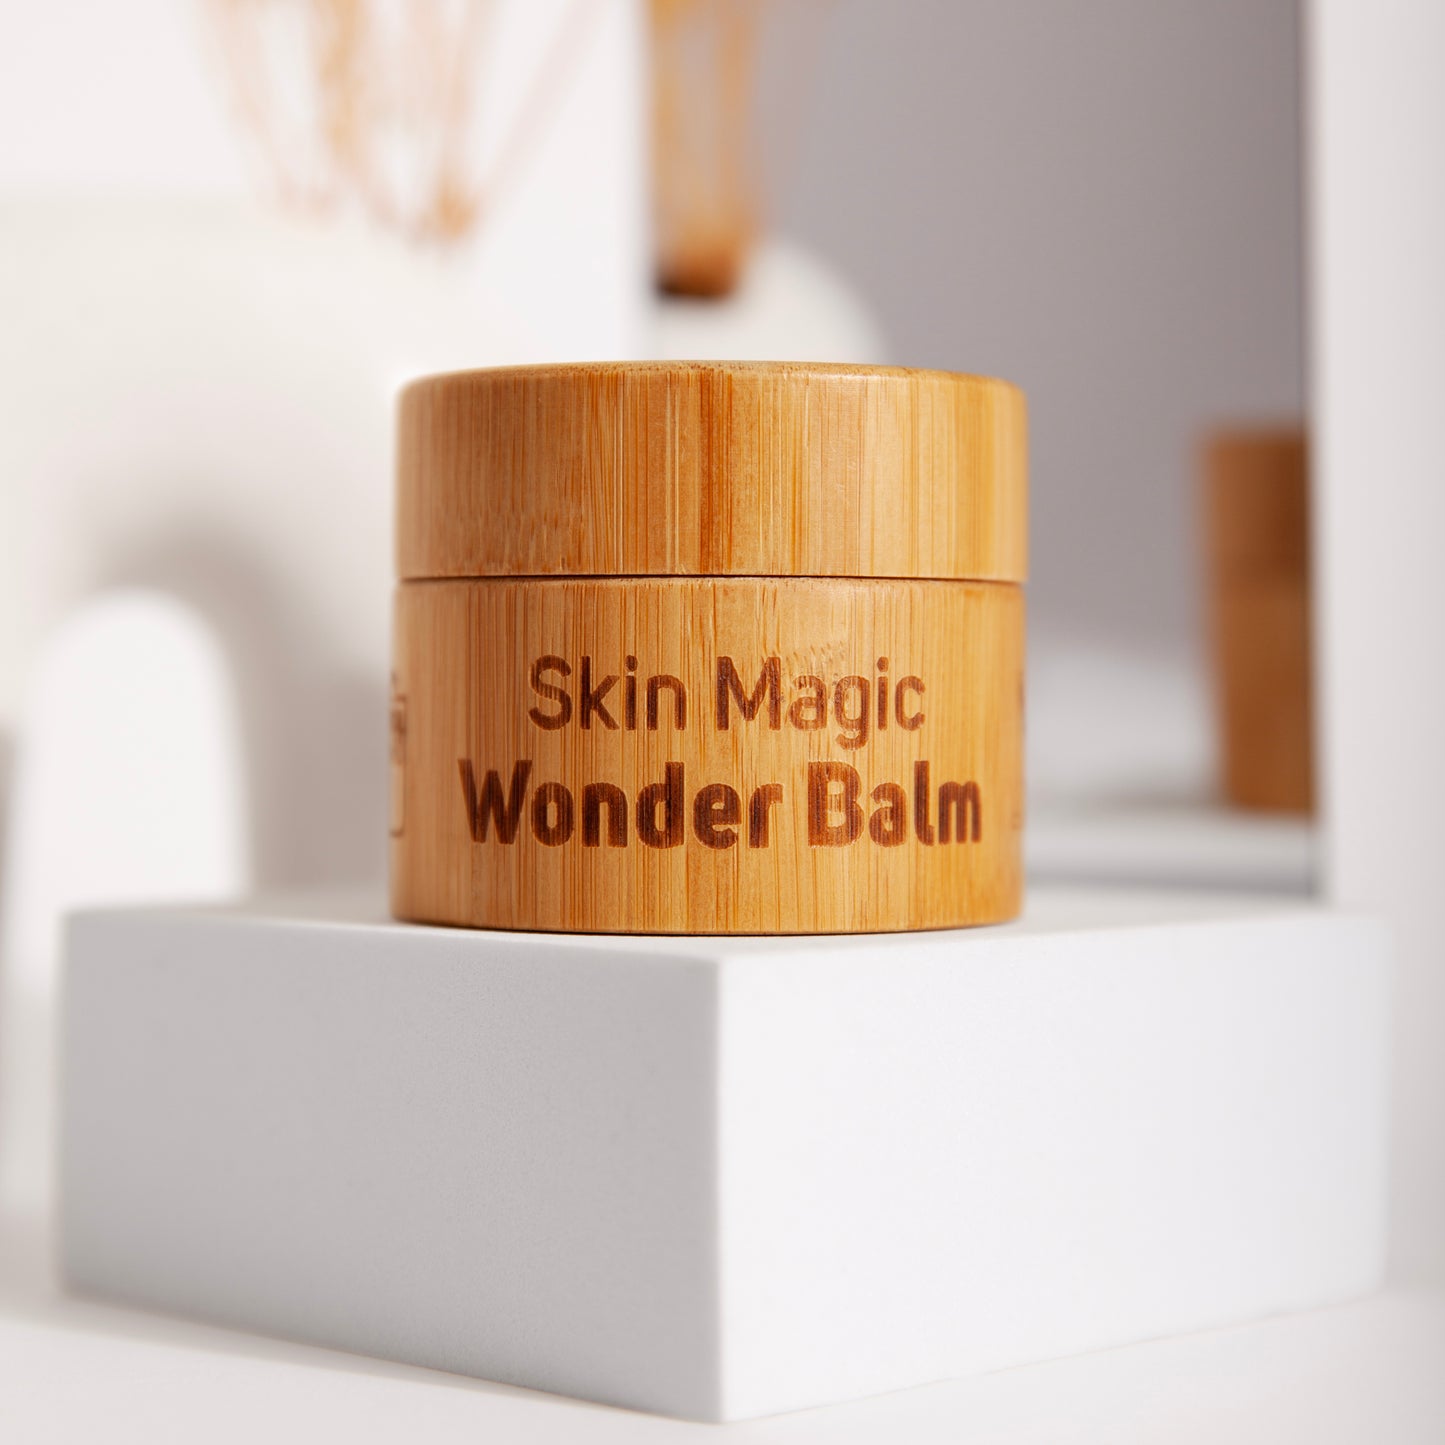 Skin Magic Wonder Balm (40G) - Citrus Scent